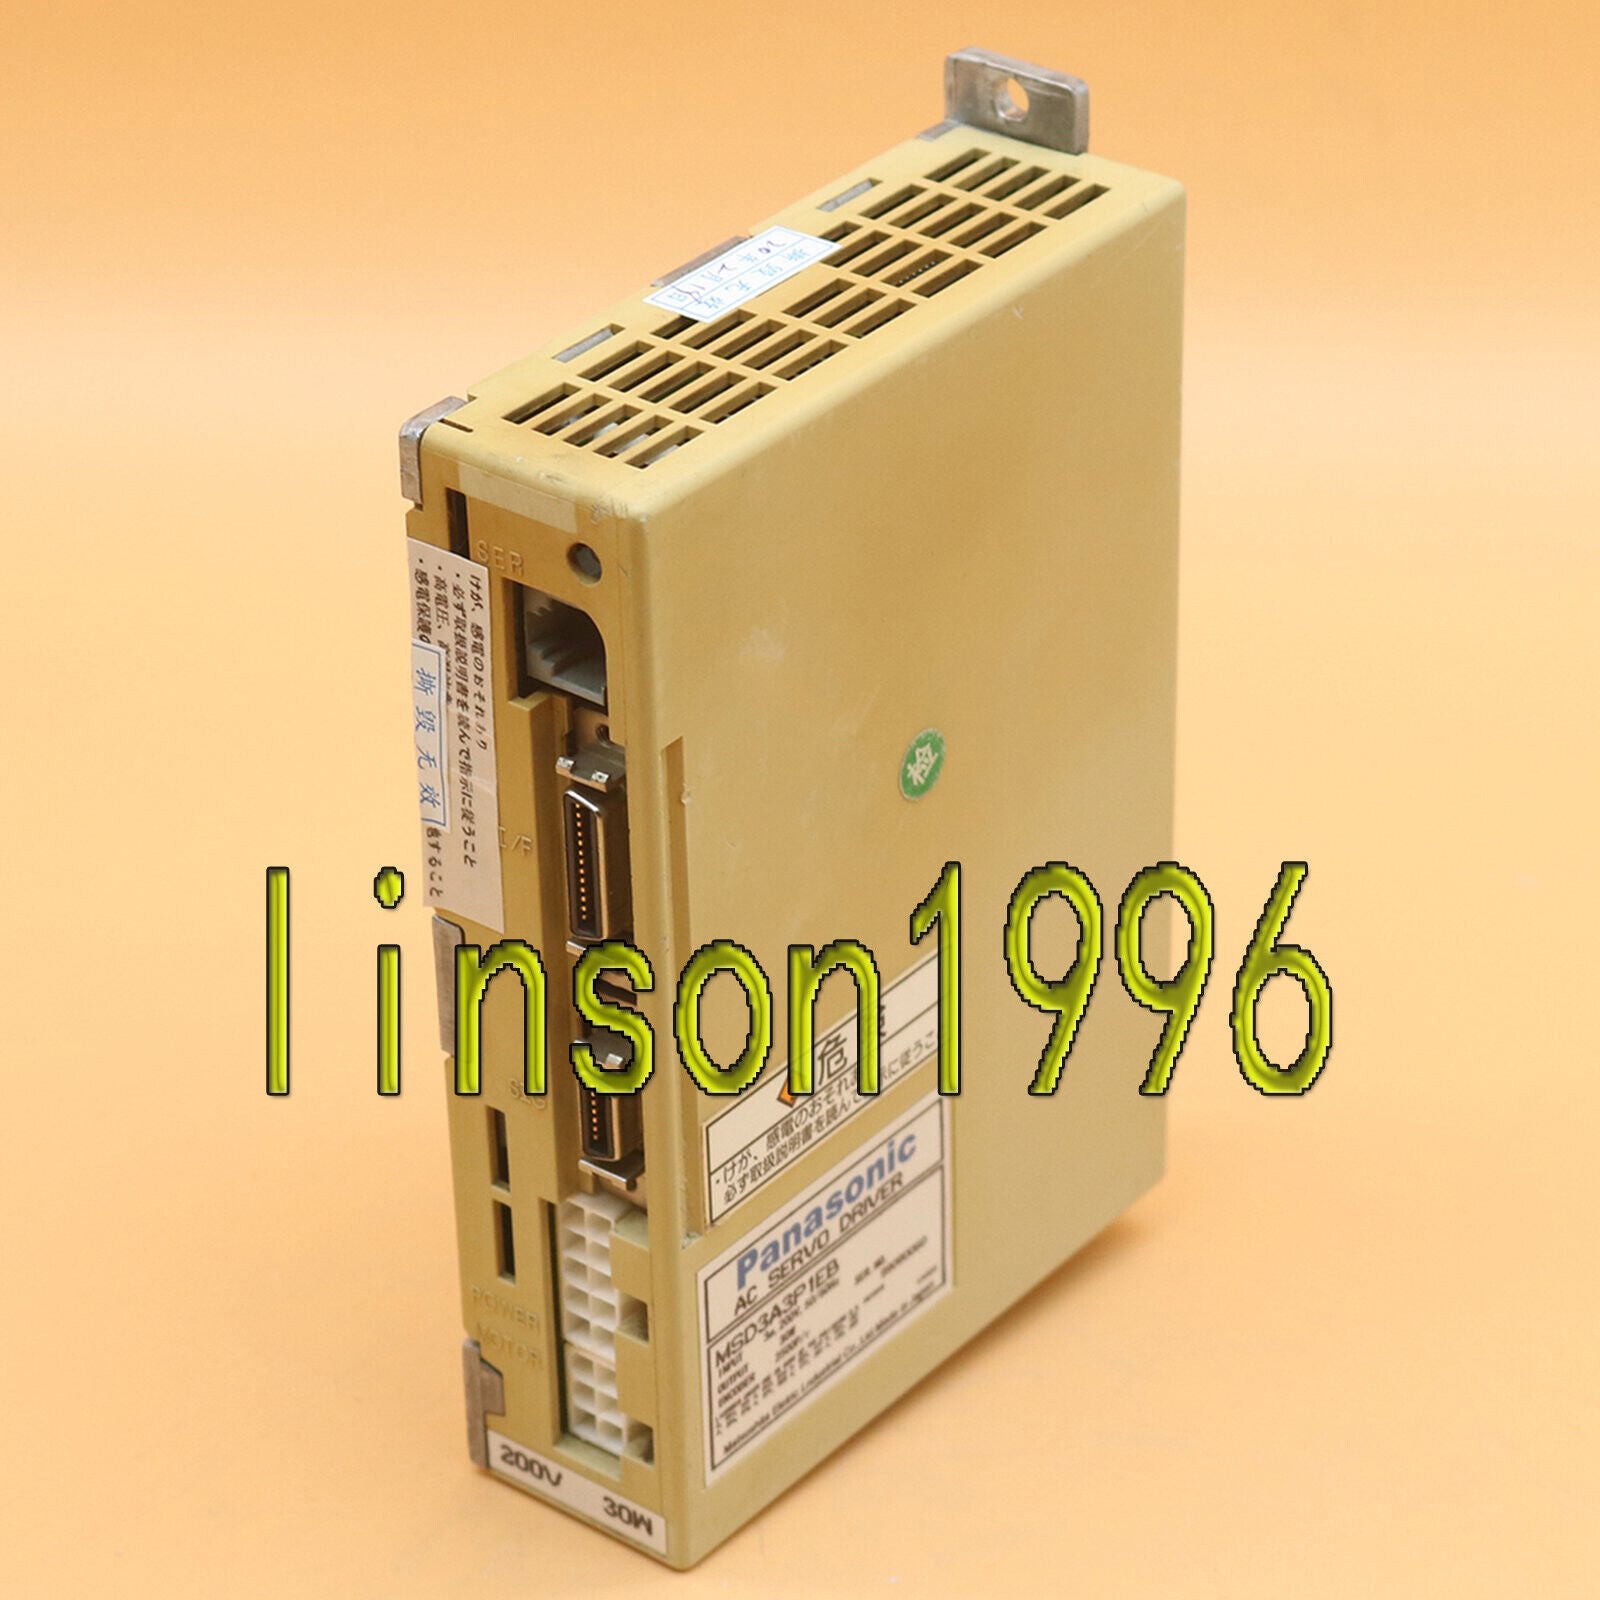 used  for Panasonic MSD3A3P1EB AC Servo Drive Tested Good